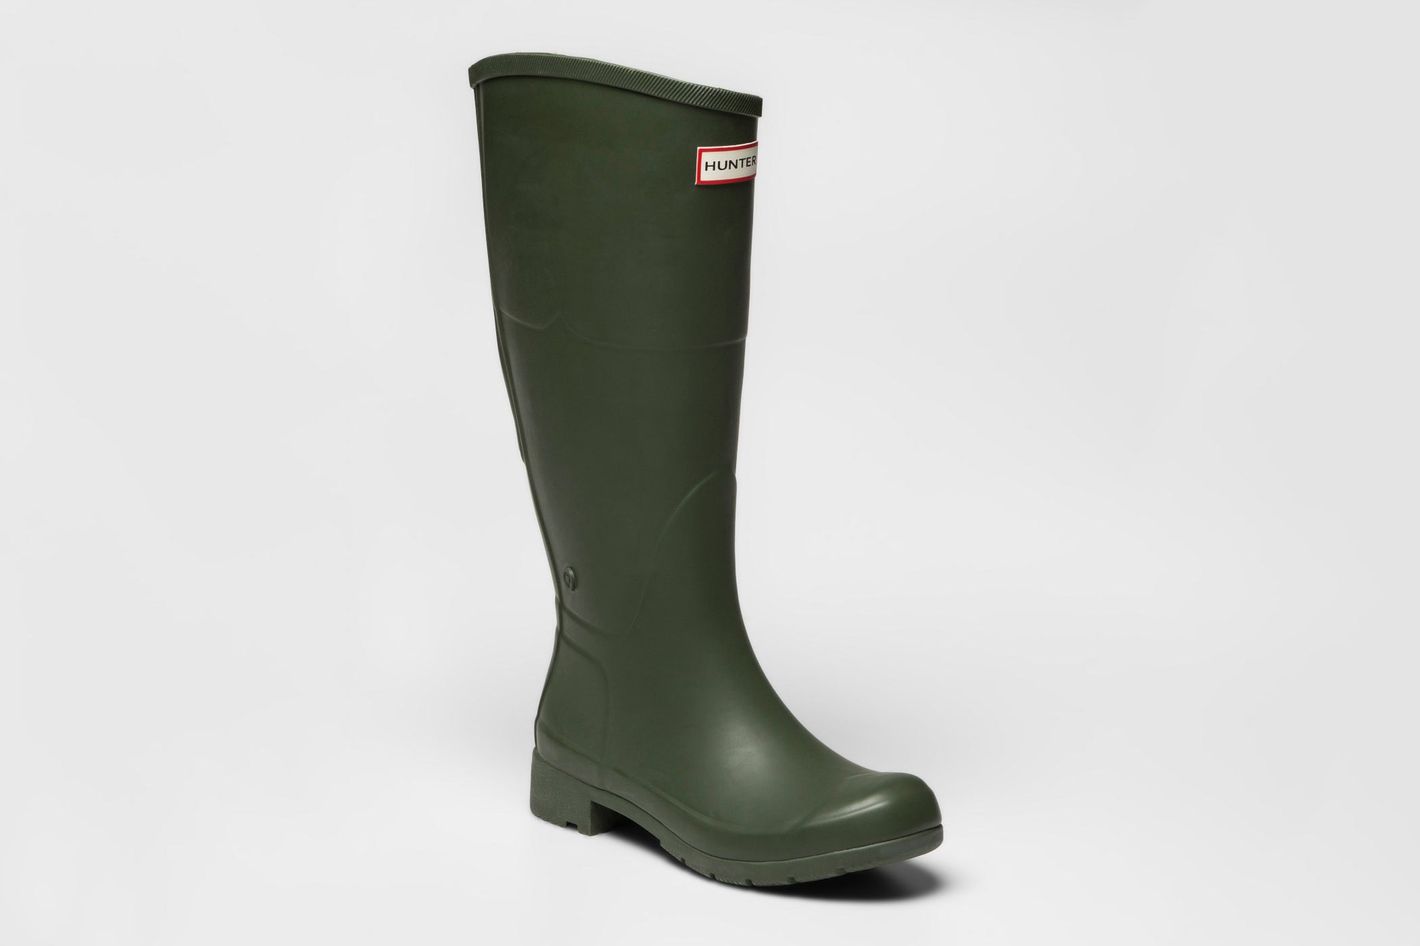 Unisex ADMINISTRATOR Wellies Wellington Black Green Rain Festival Snow Boots 